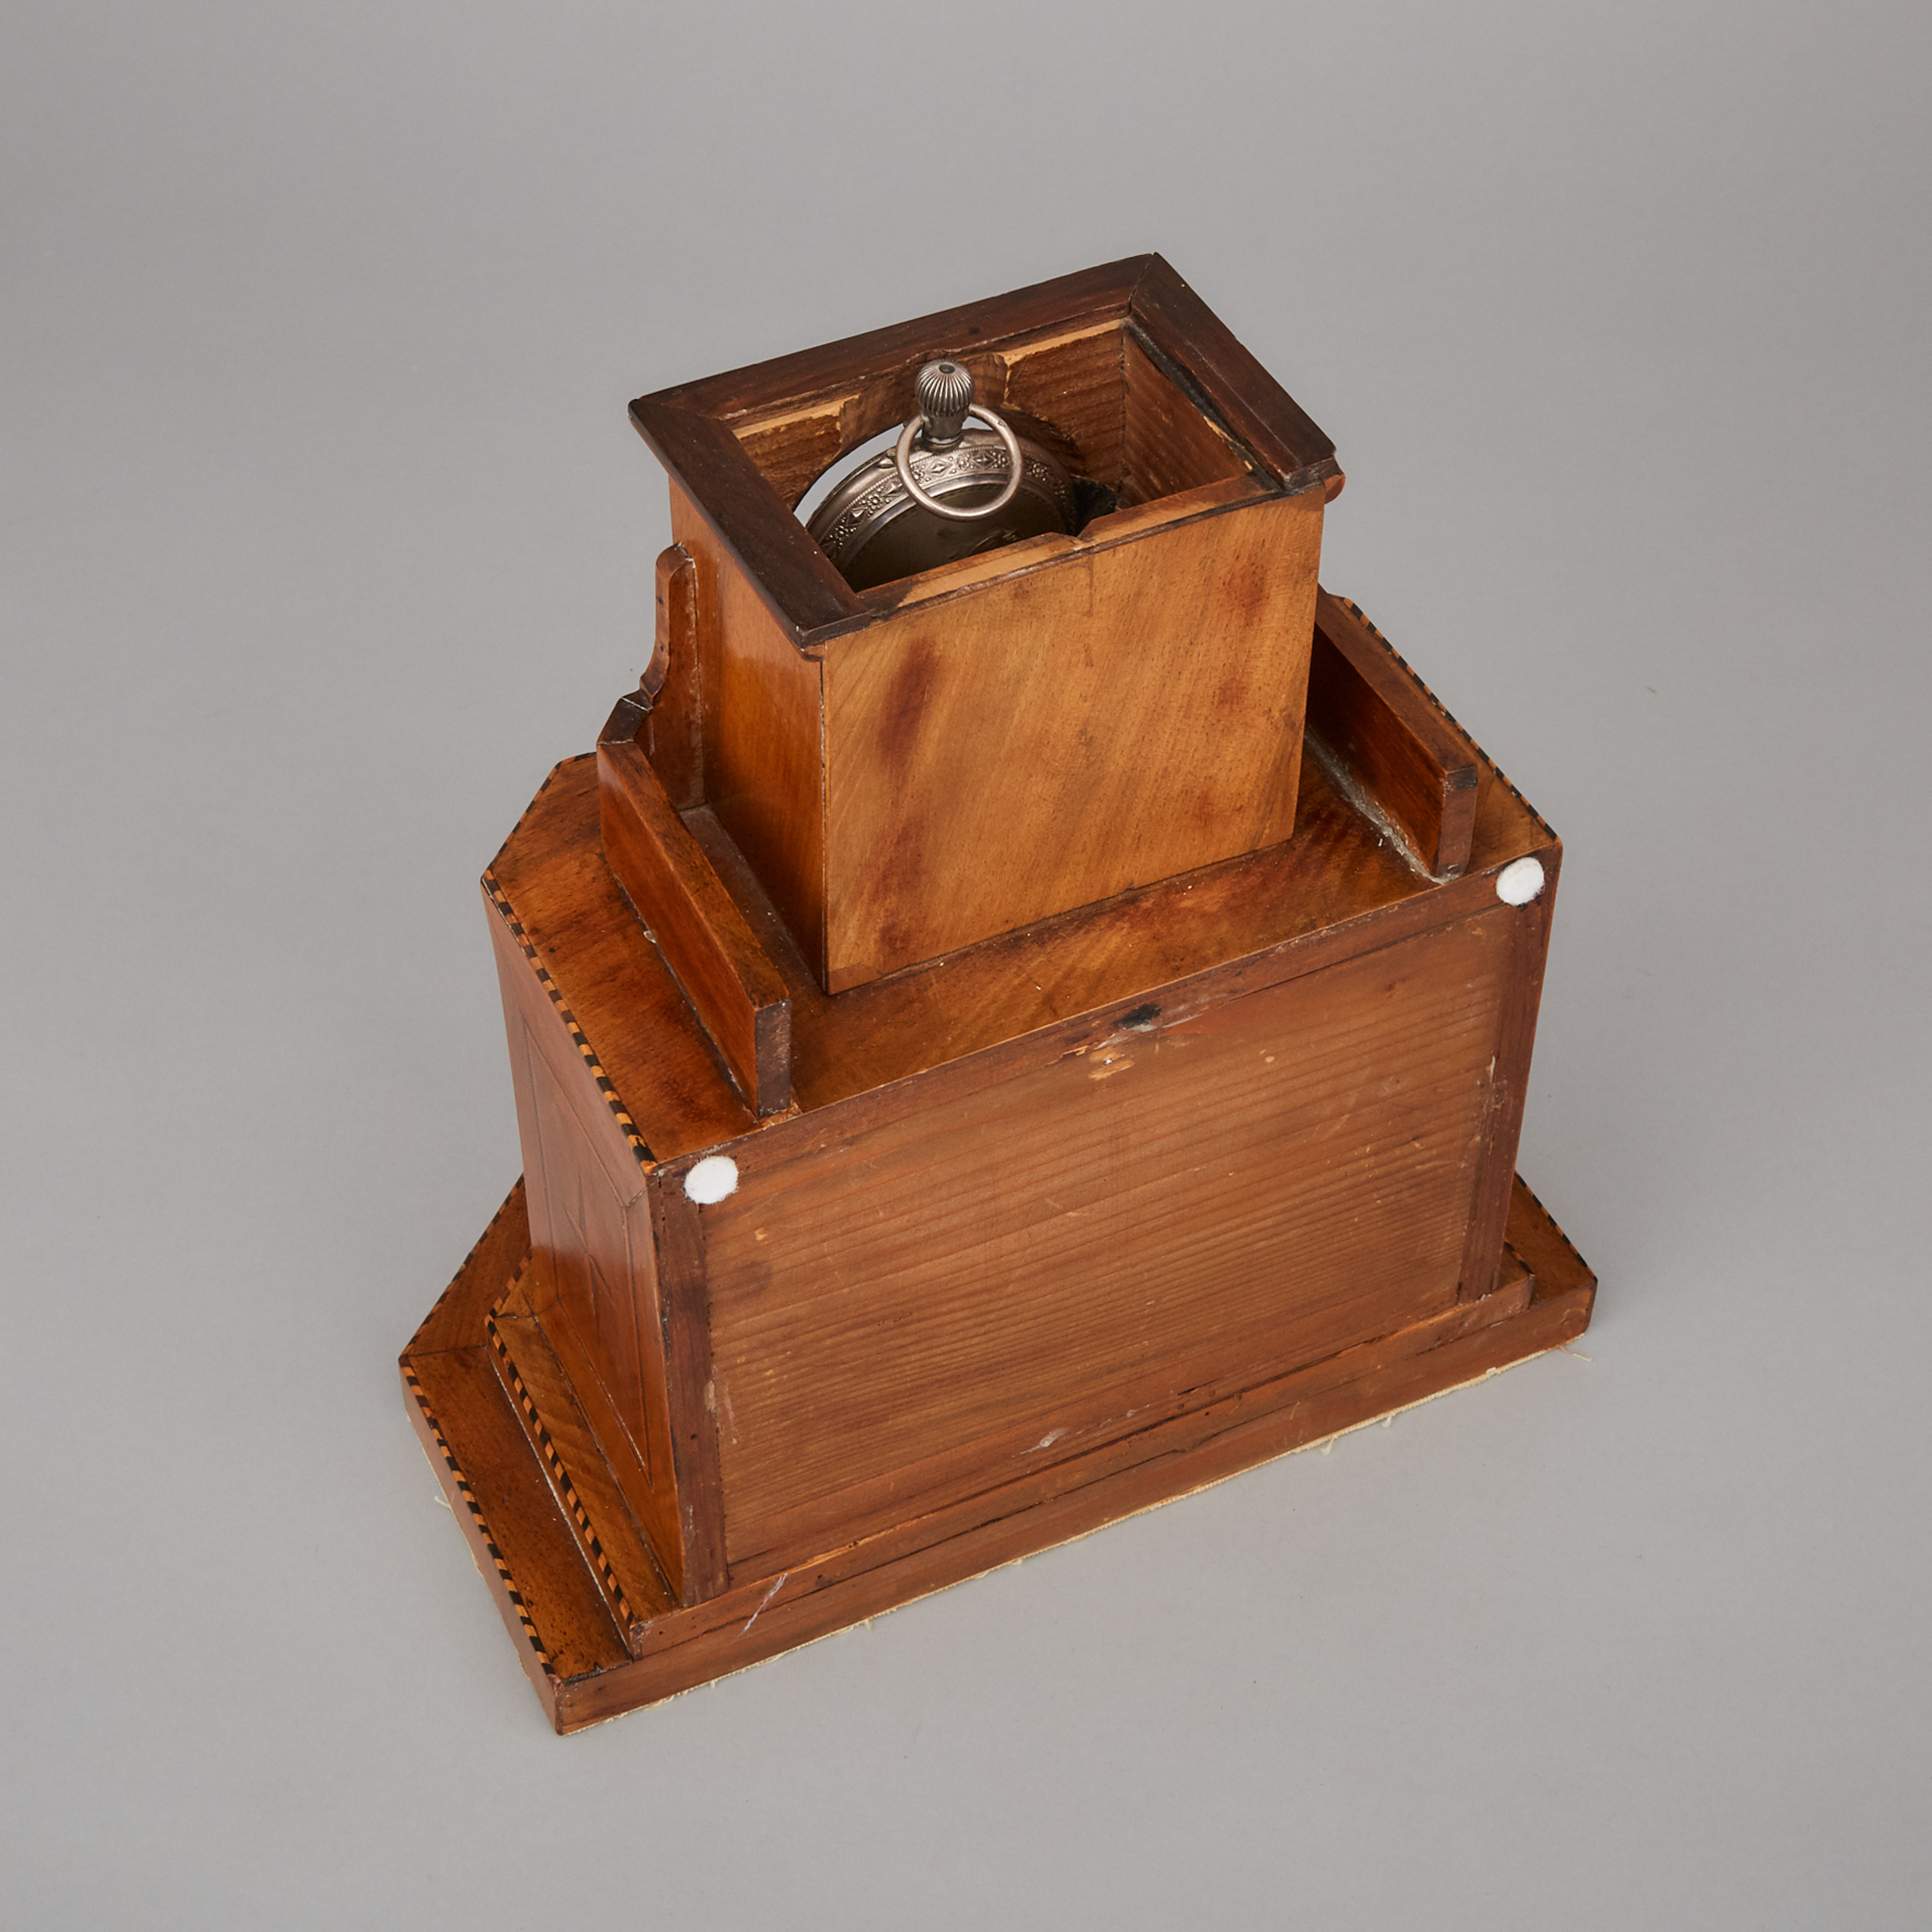 Austrian Biedermeier Pear Wood Watch Stand, early 19th century